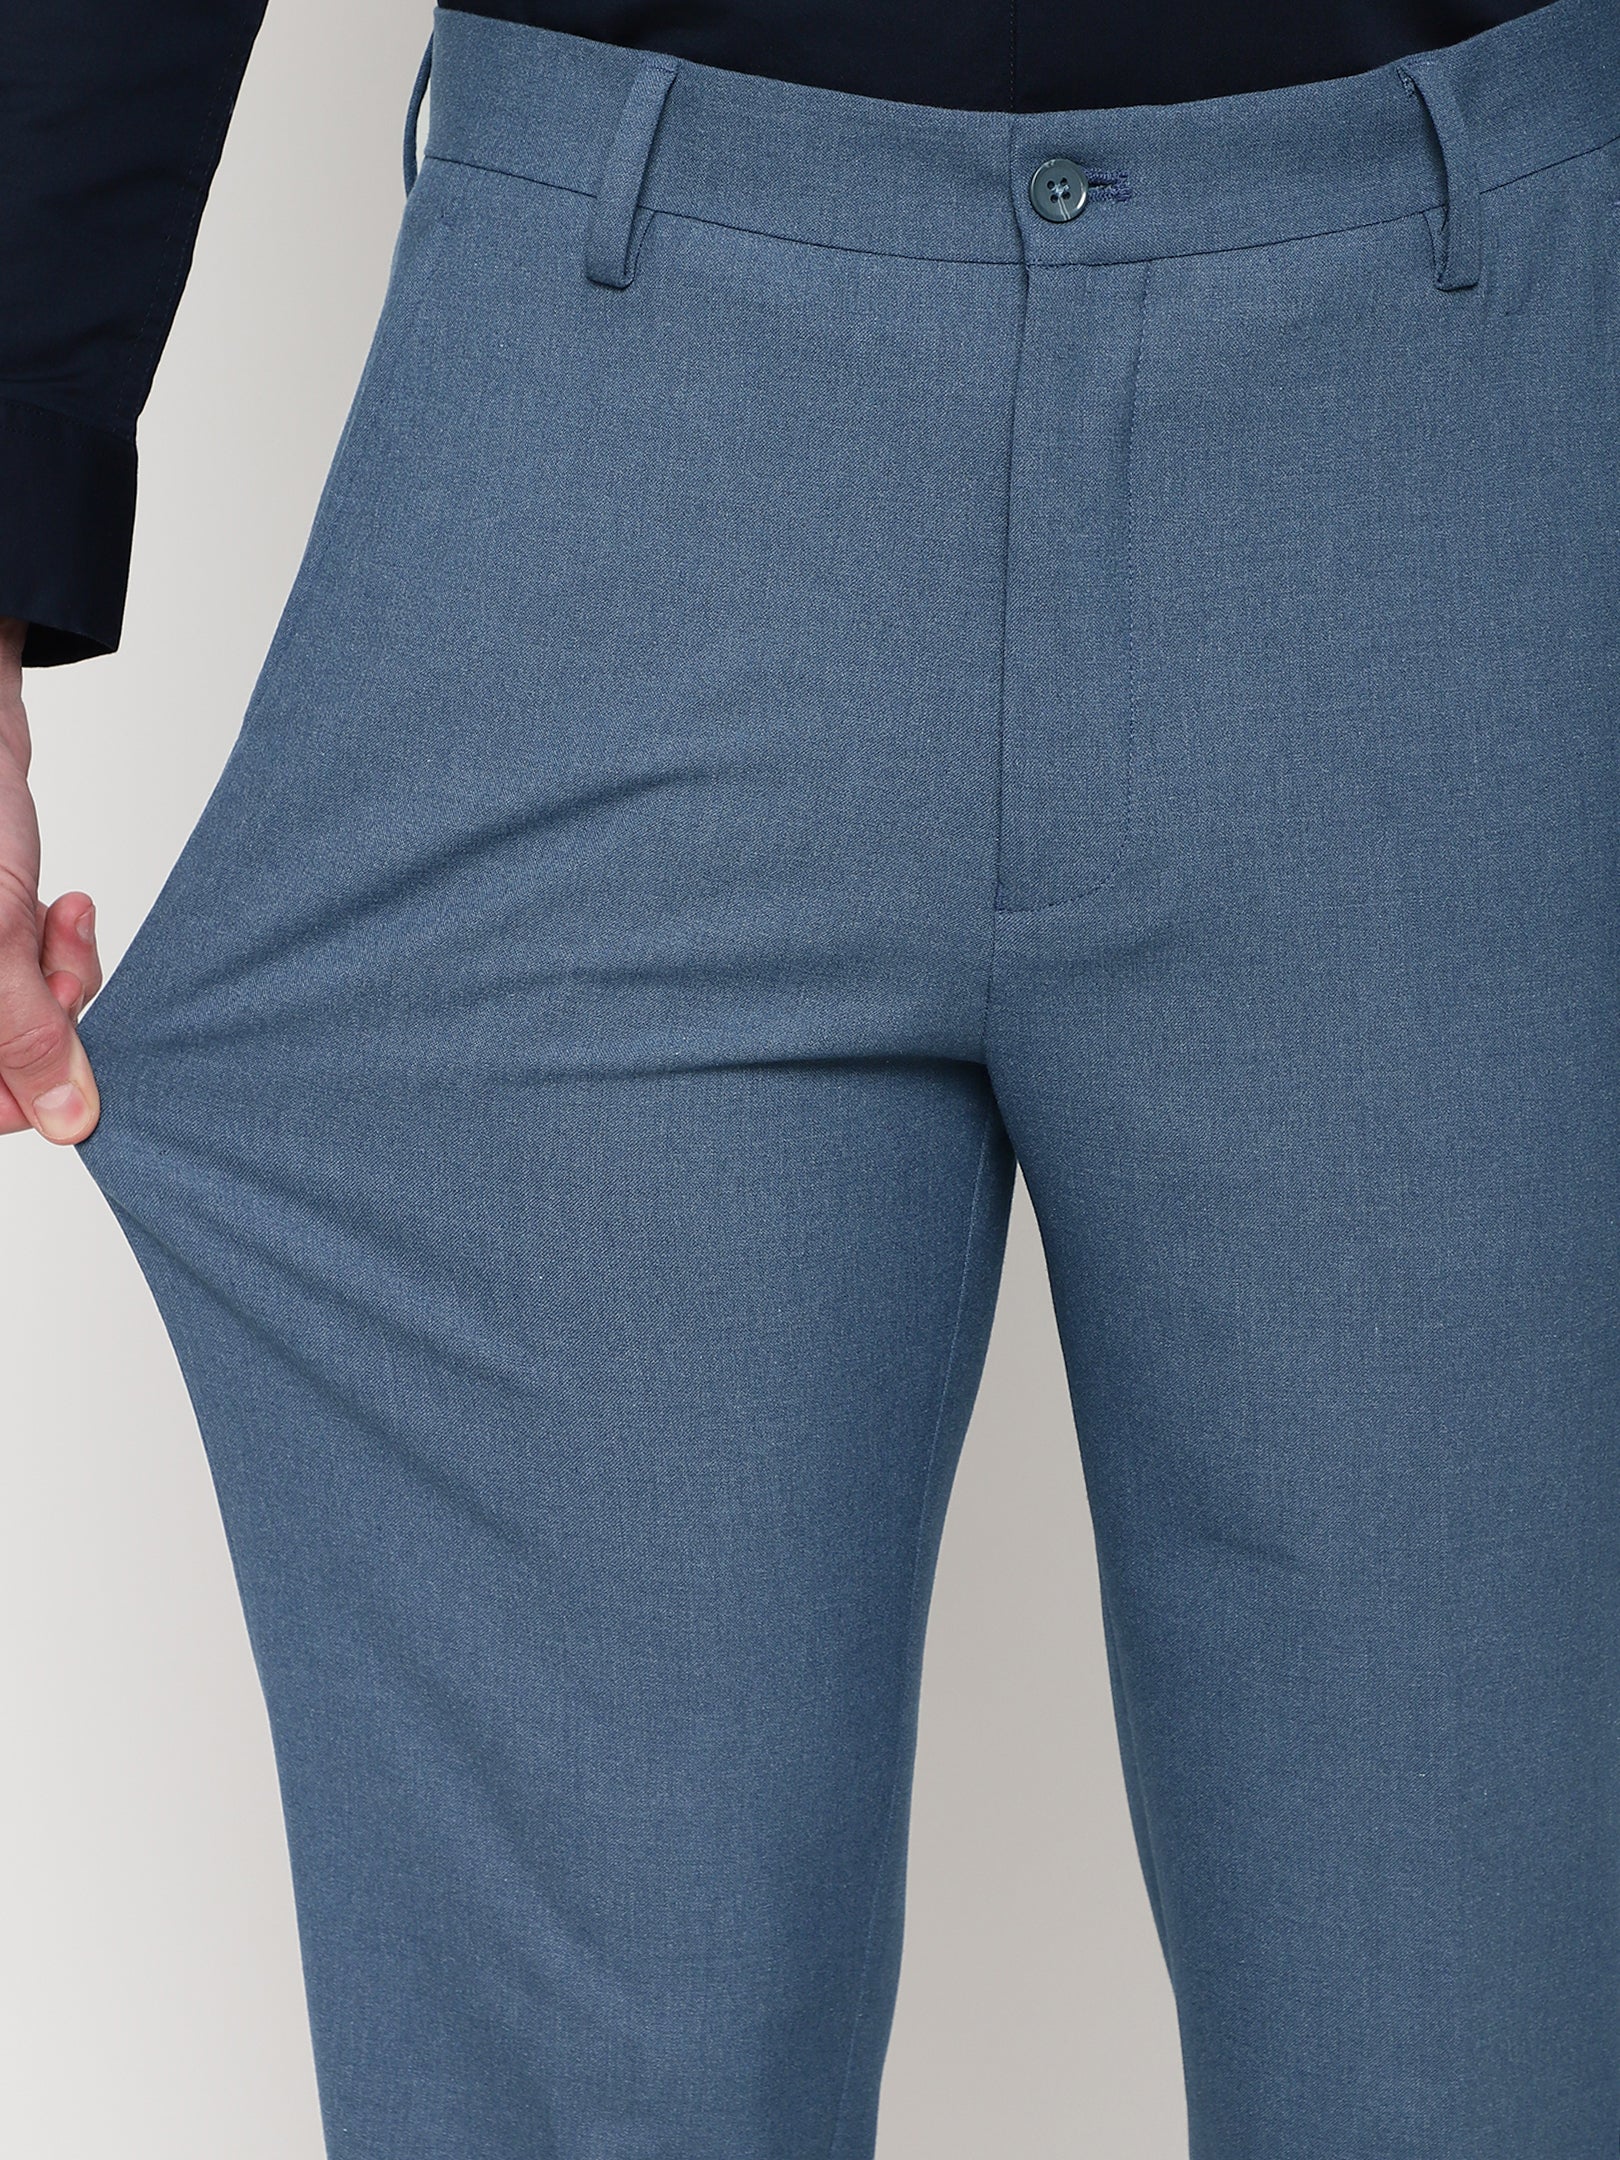  Blue Grey Slim Fit Formal Trouser Formal Pant For Men